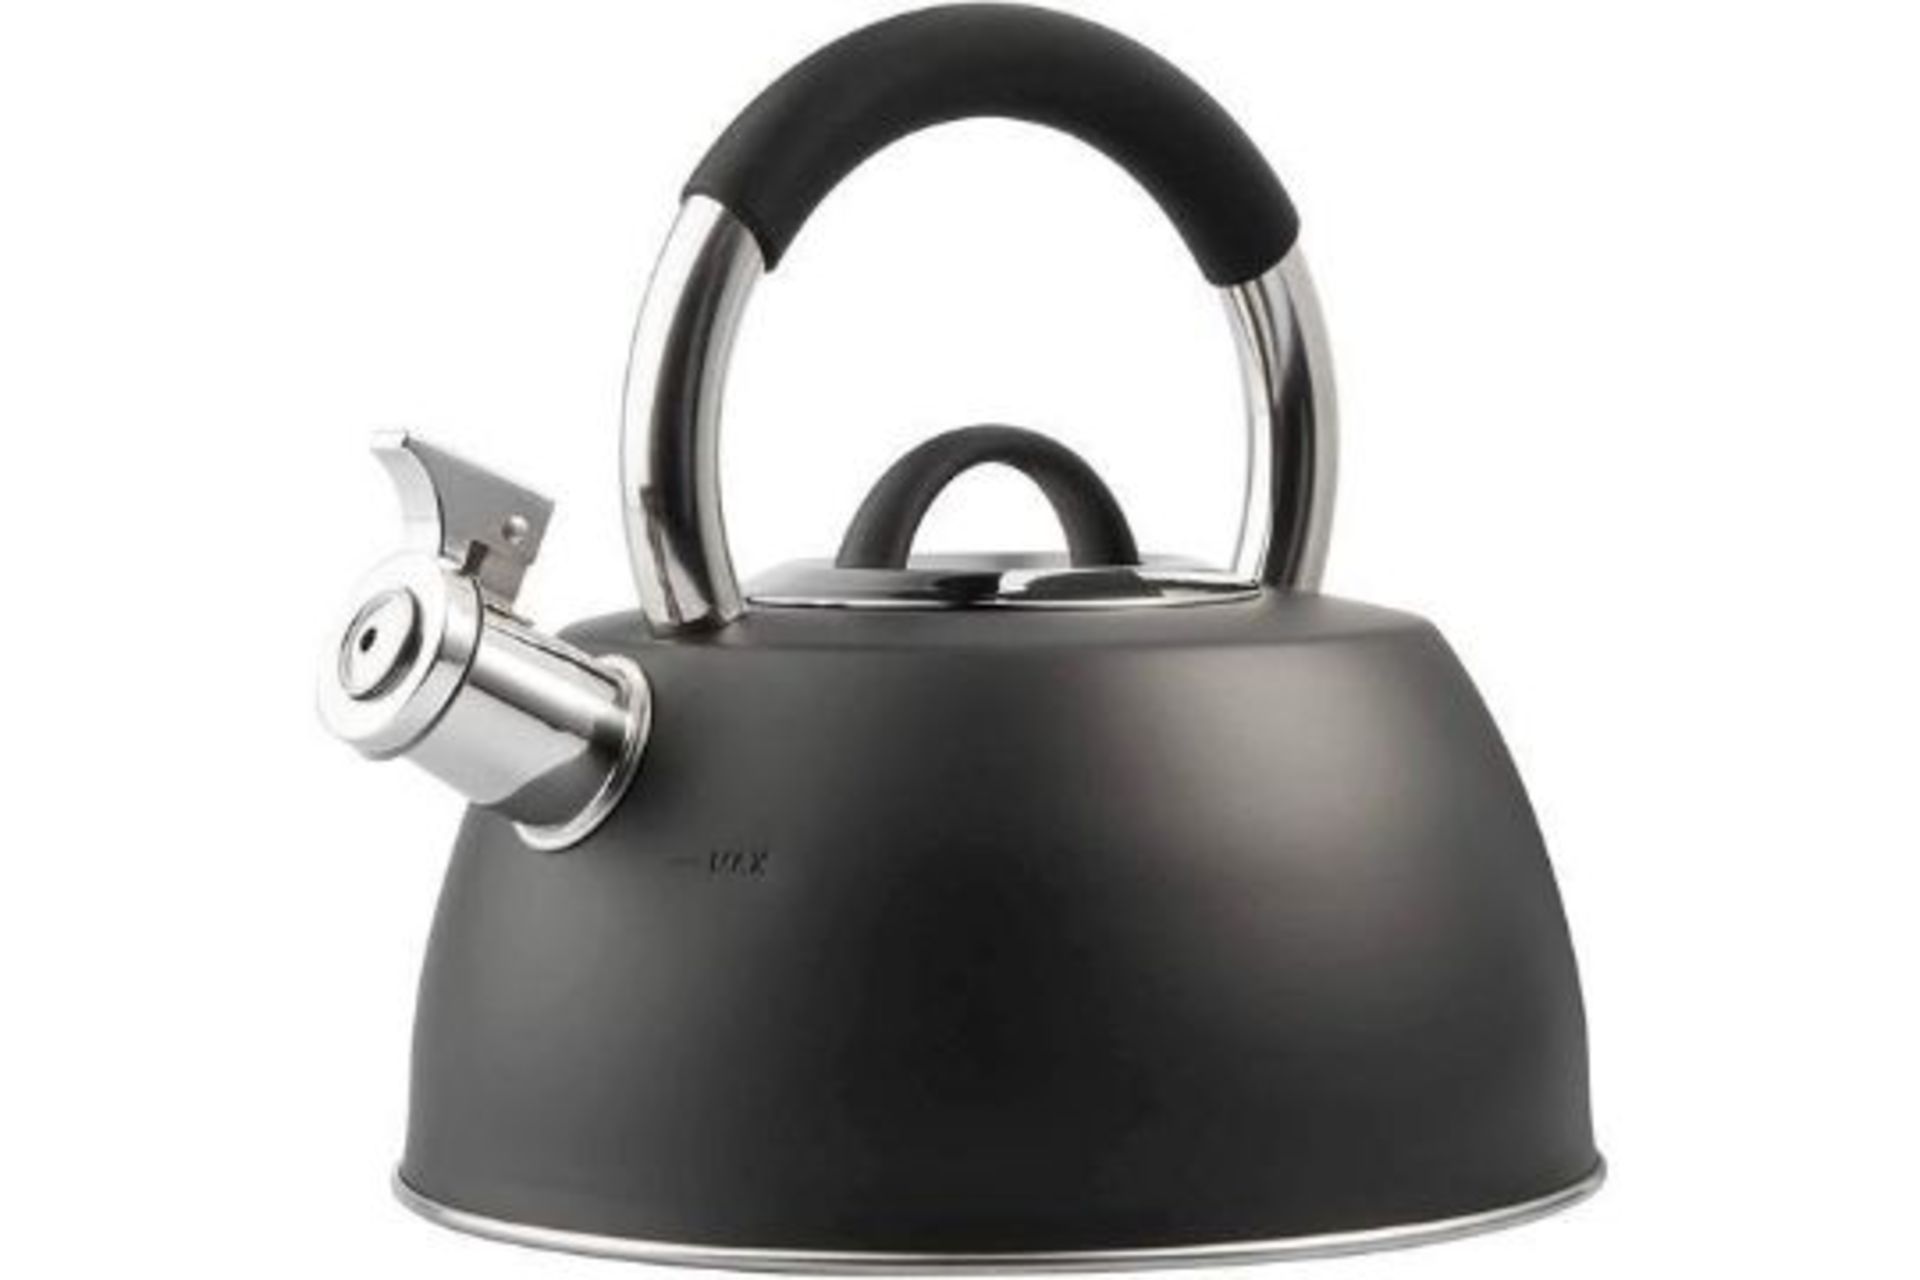 Luxury Stainless Steel Tea Kettle (ER51) Luxury Stainless Steel Tea Maker Features:. Satin black